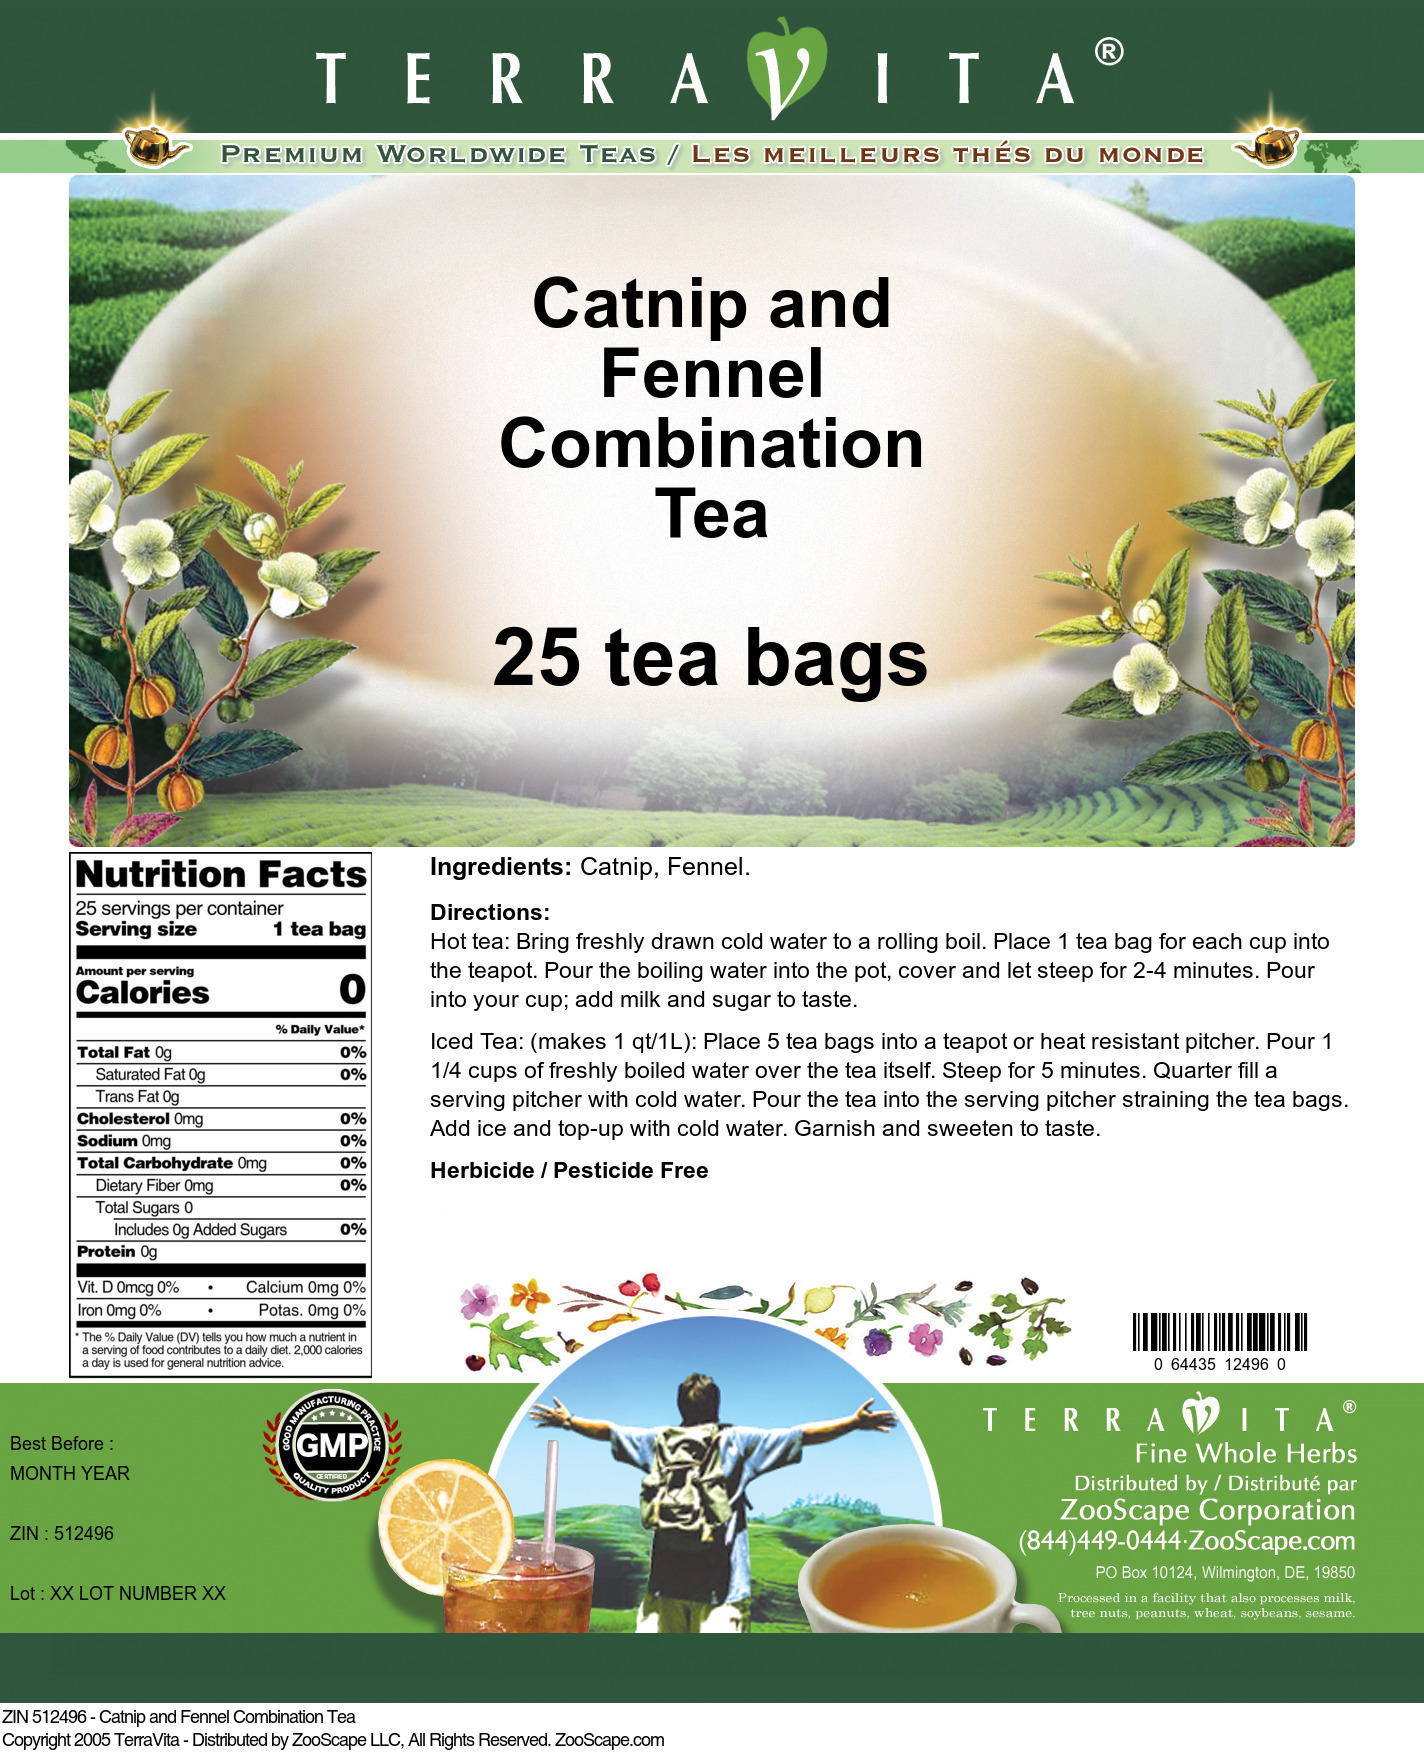 Catnip and Fennel Combination Tea - Label